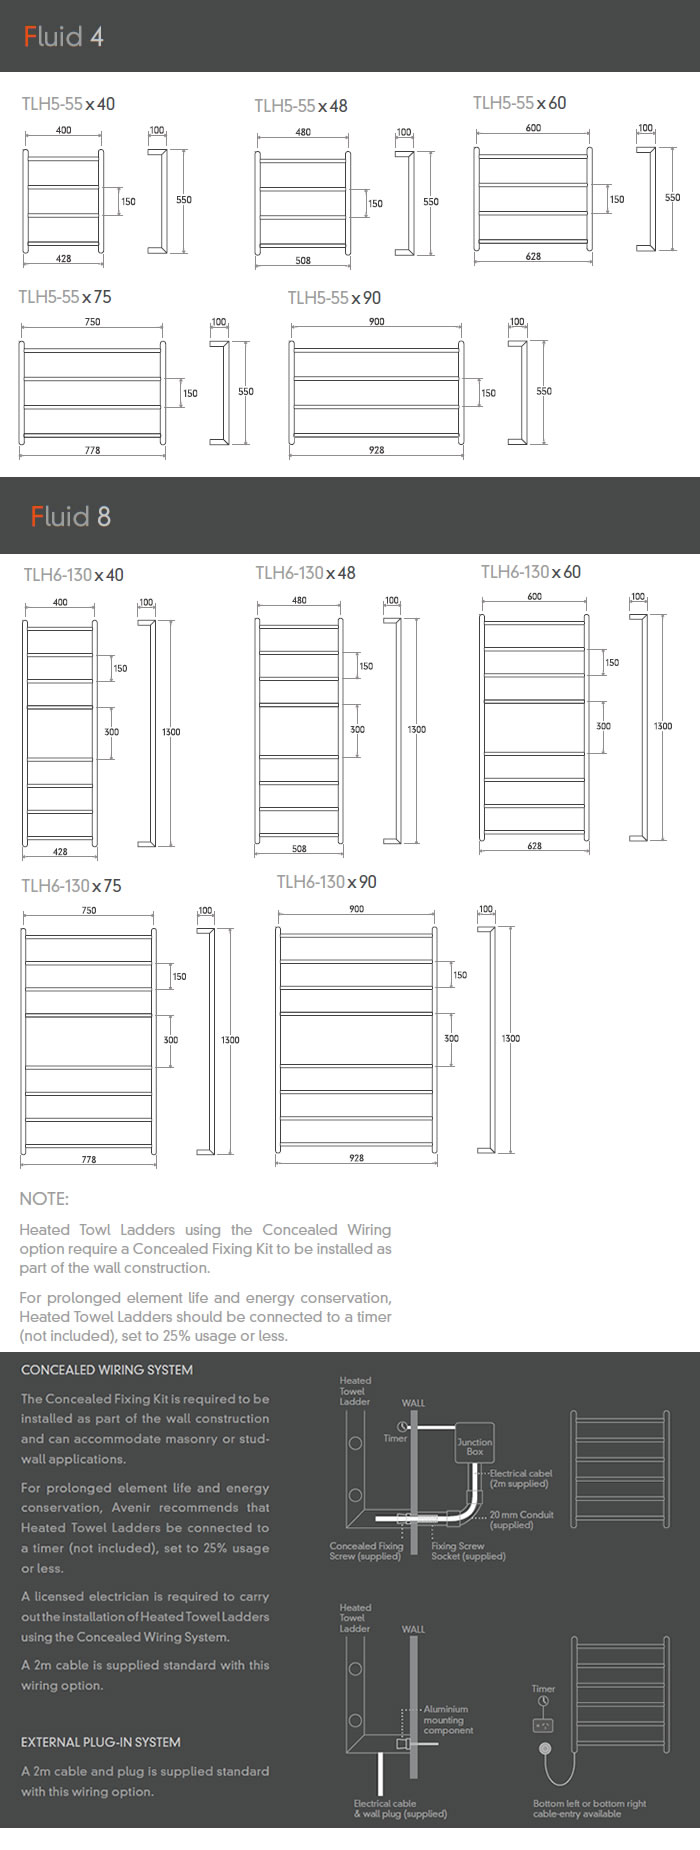 Avenir Fluid Heated Towel Ladder specifications